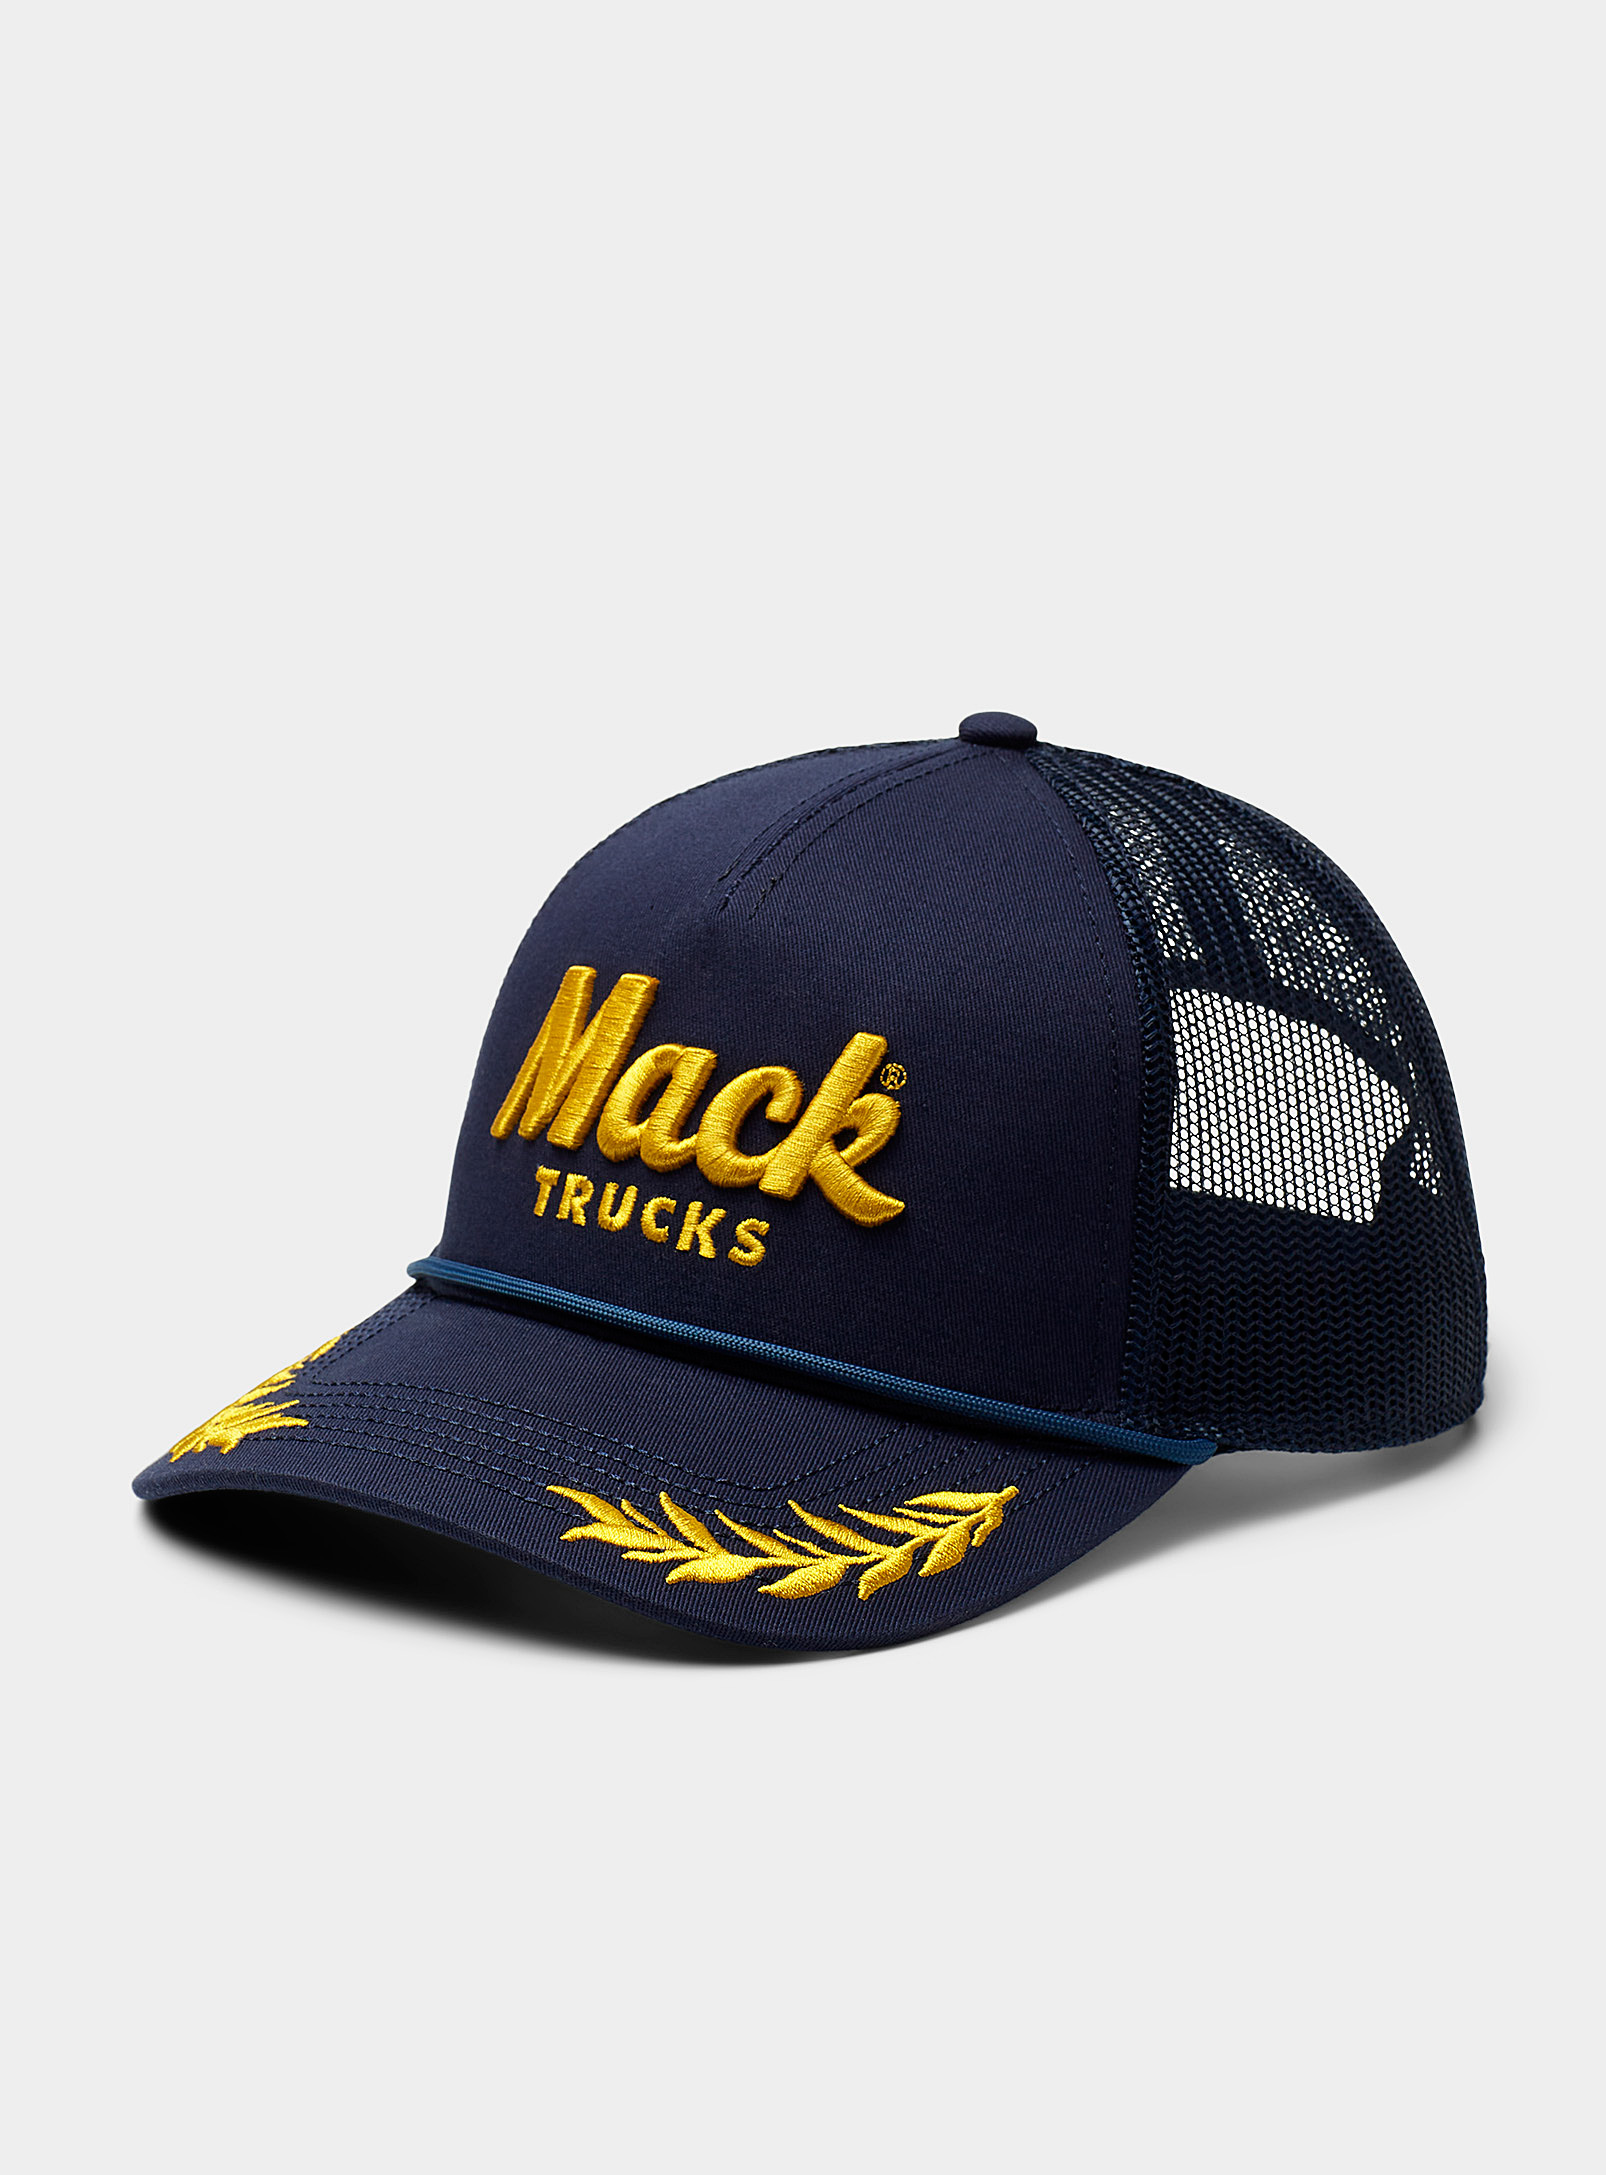 American Needle - Men's Mack Trucks trucker cap